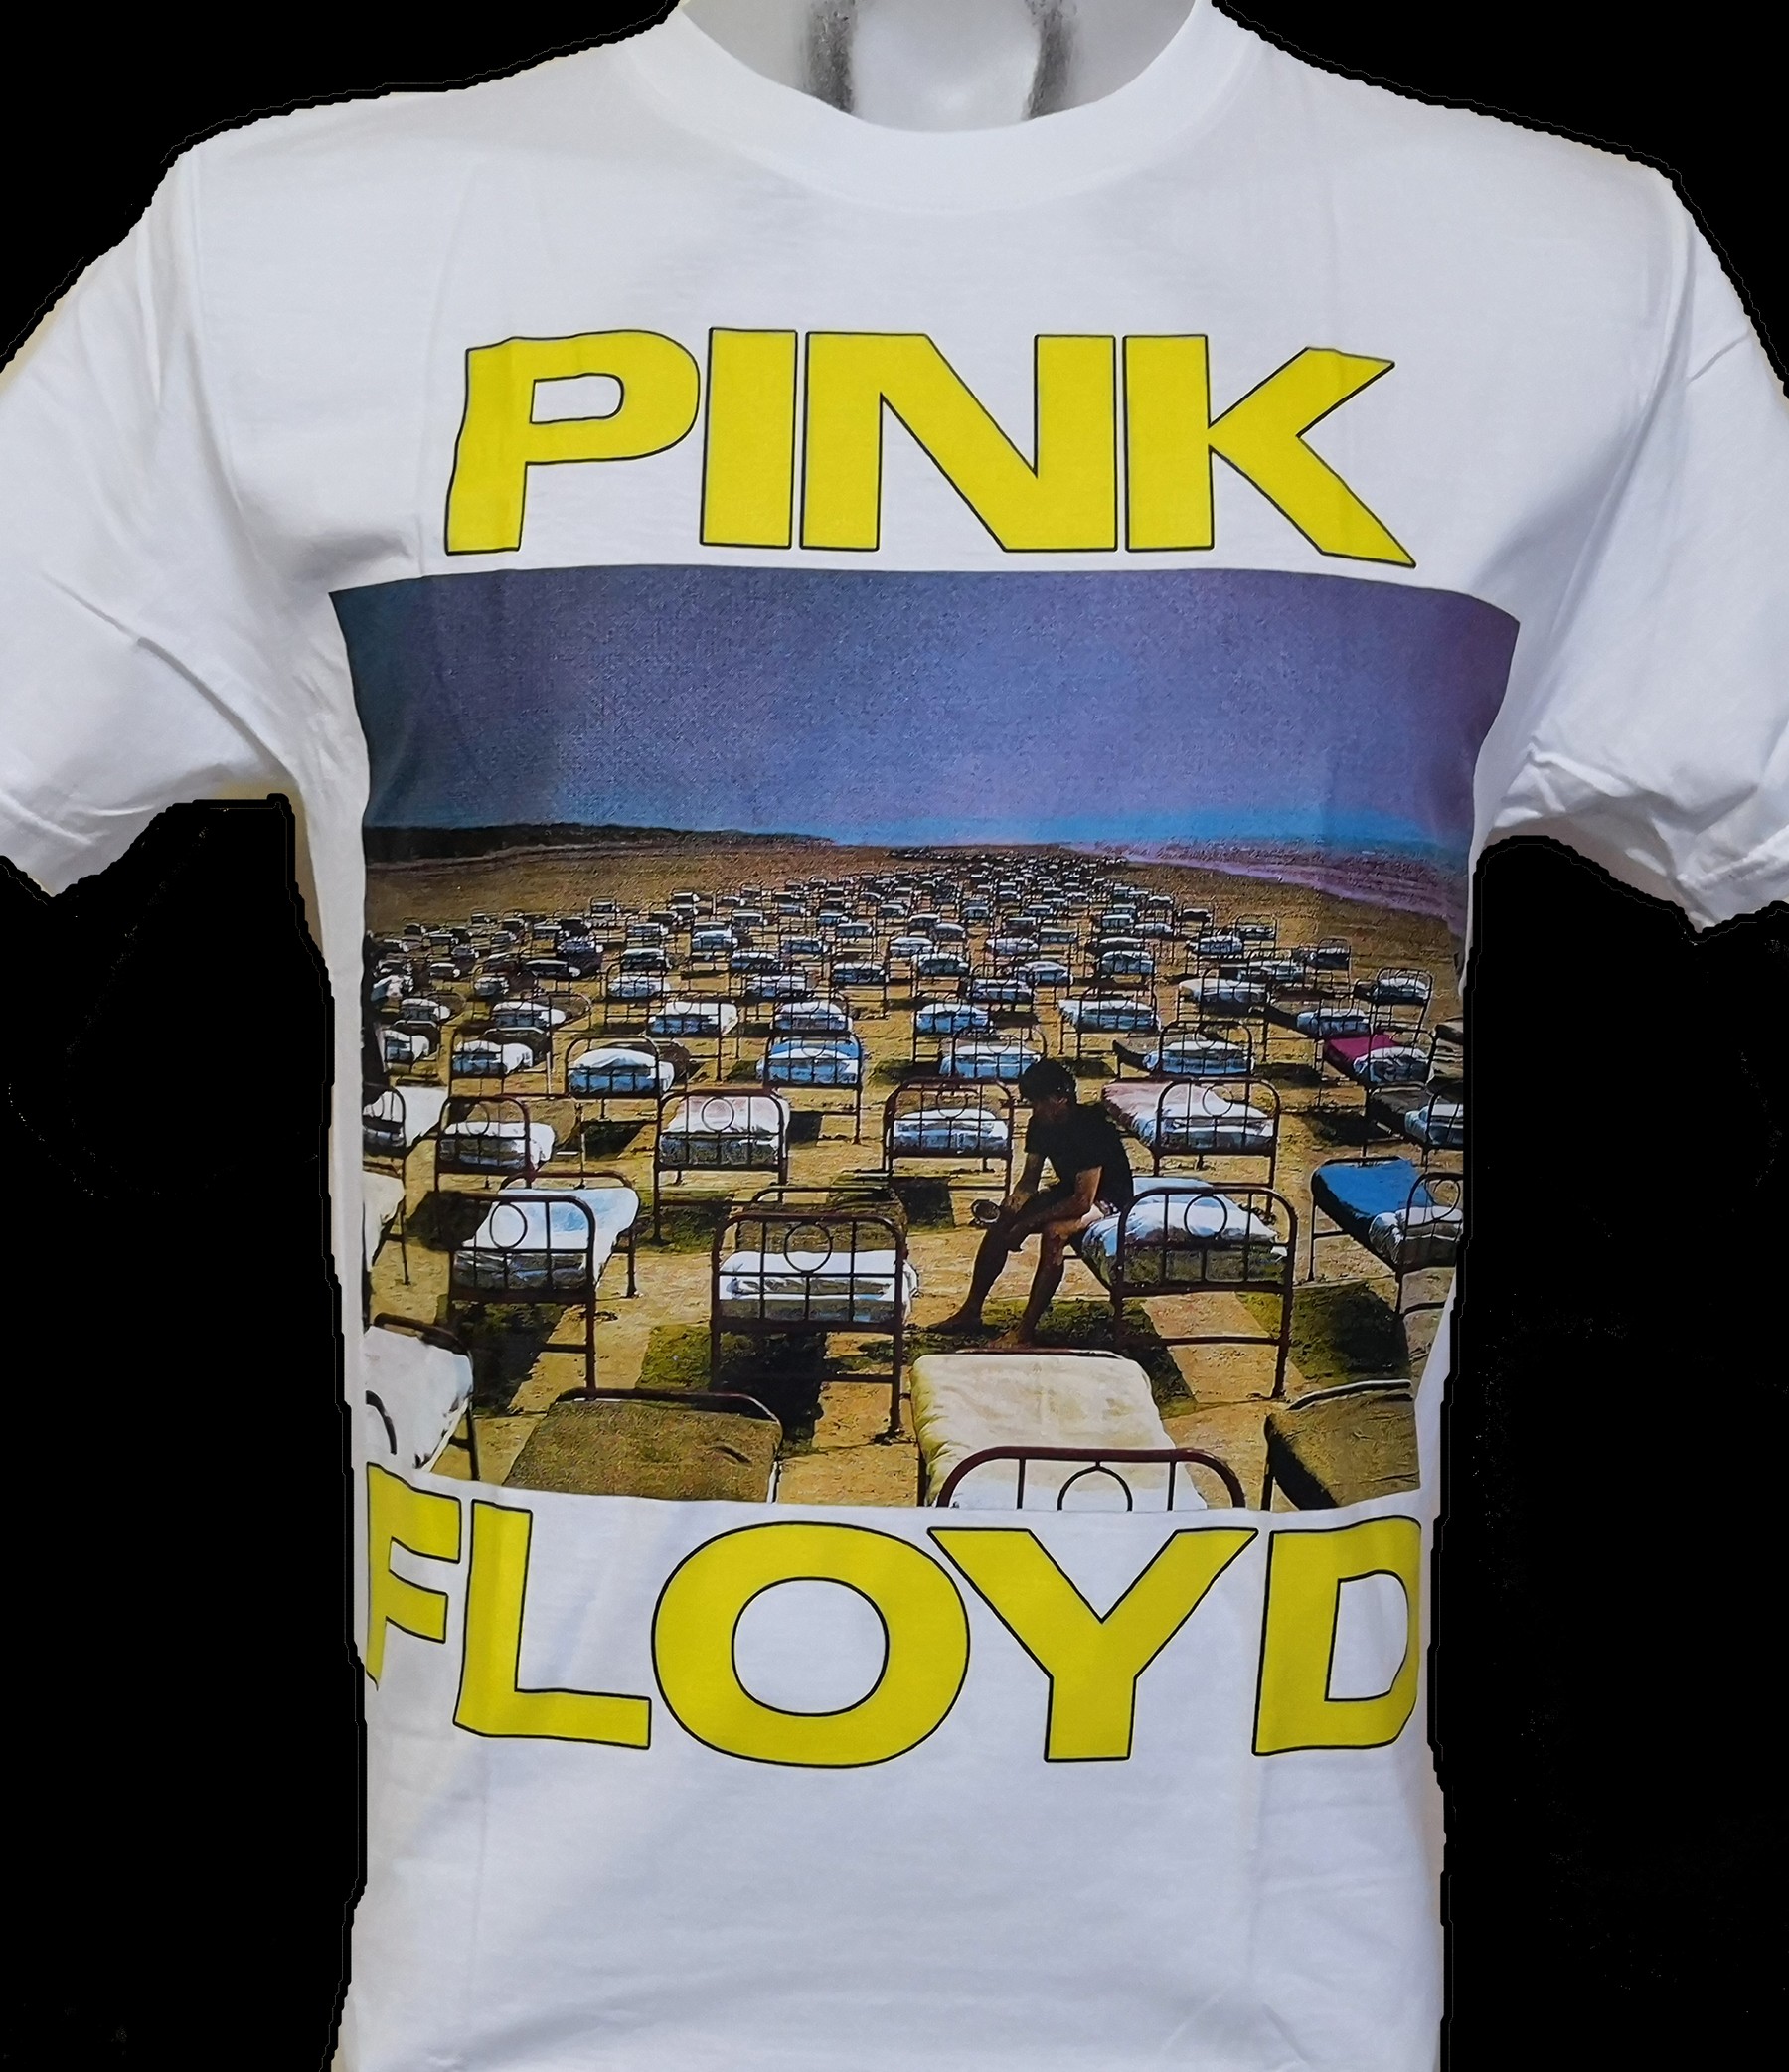 pink floyd t shirt malaysia